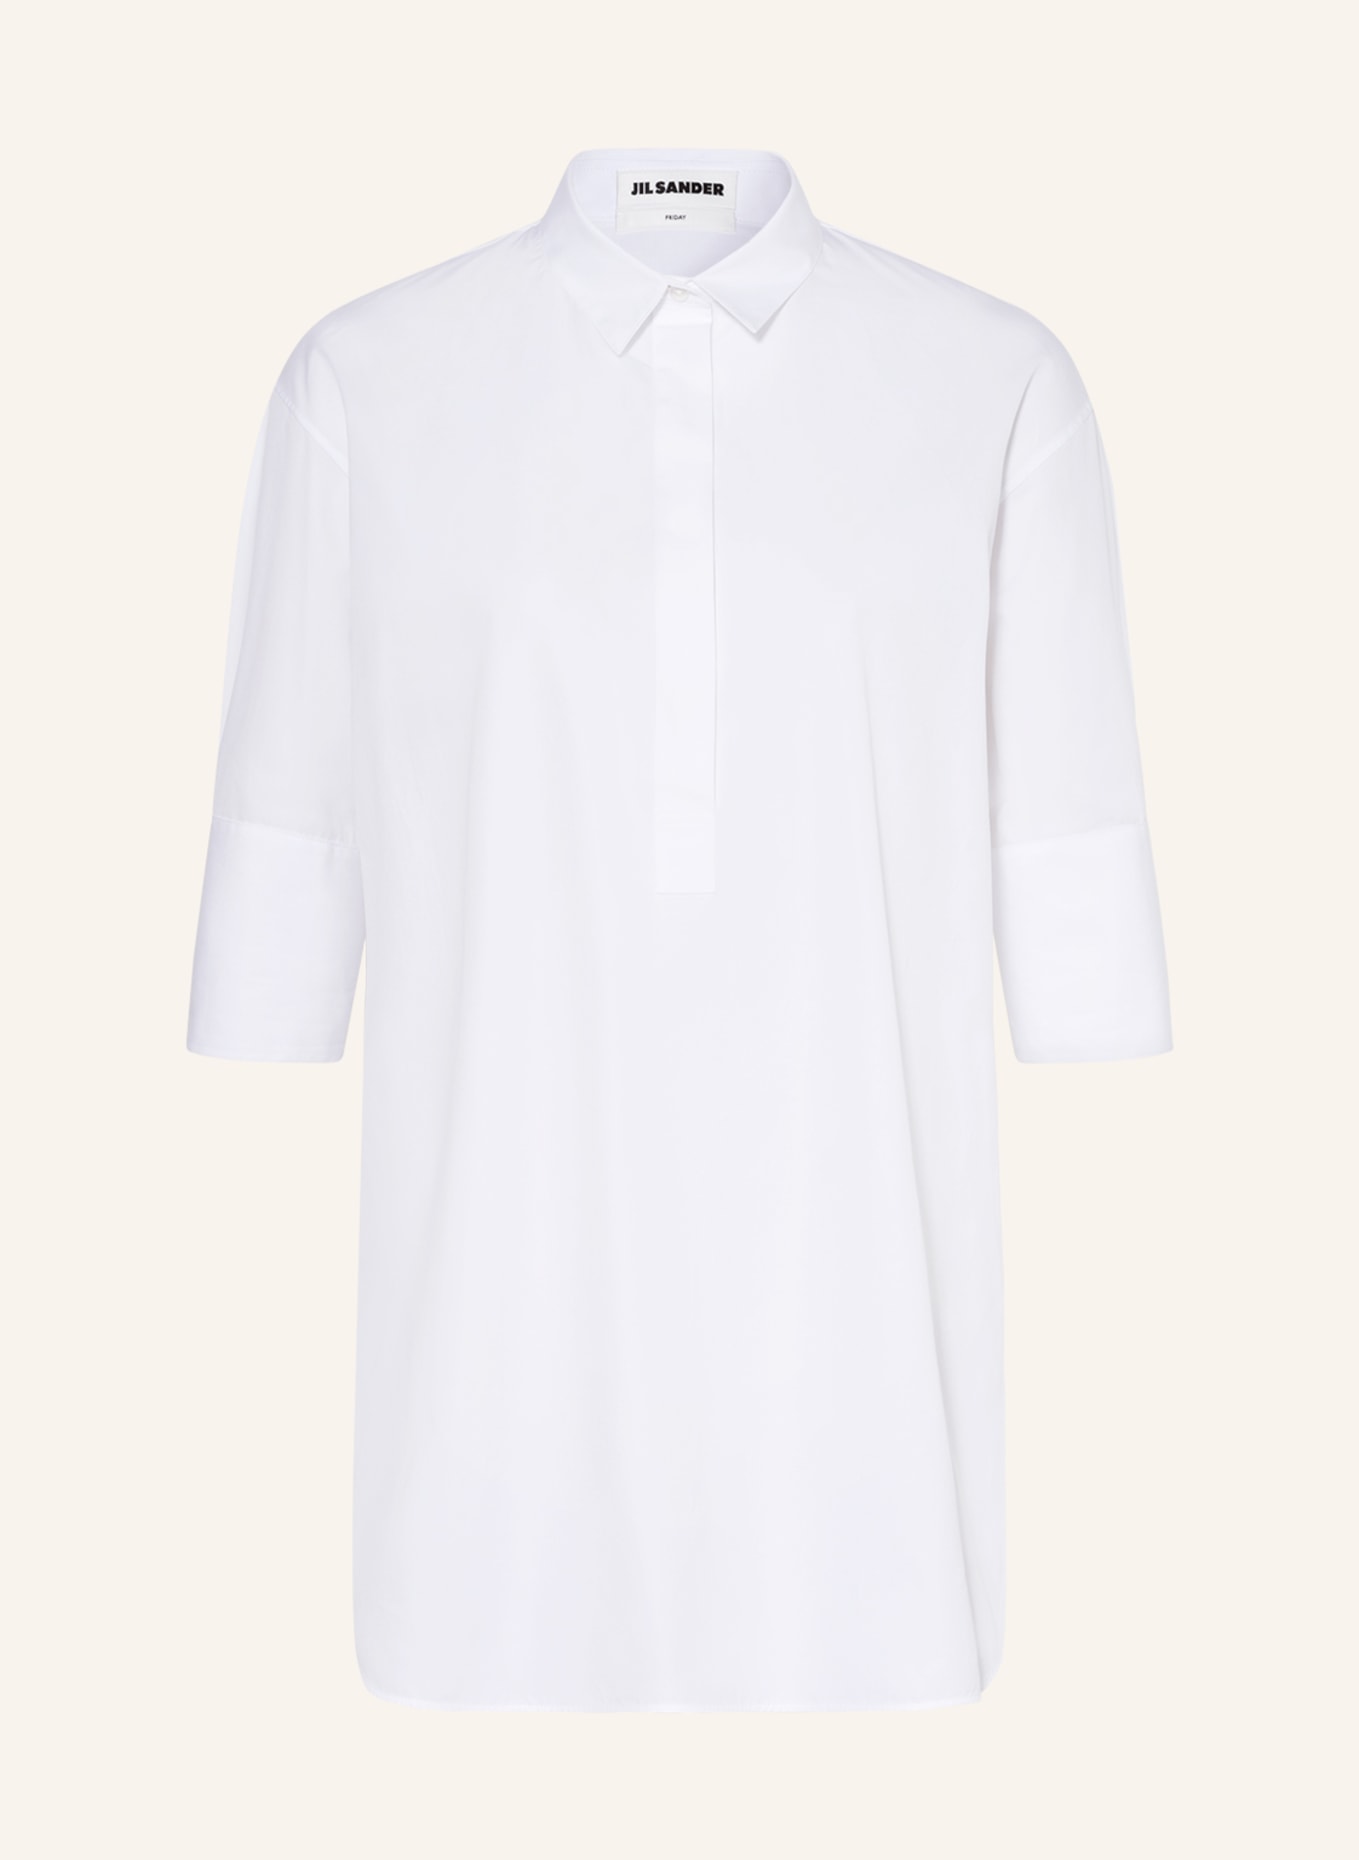 JIL SANDER Oversized-Bluse mit 3/4-Arm, Farbe: WEISS (Bild 1)